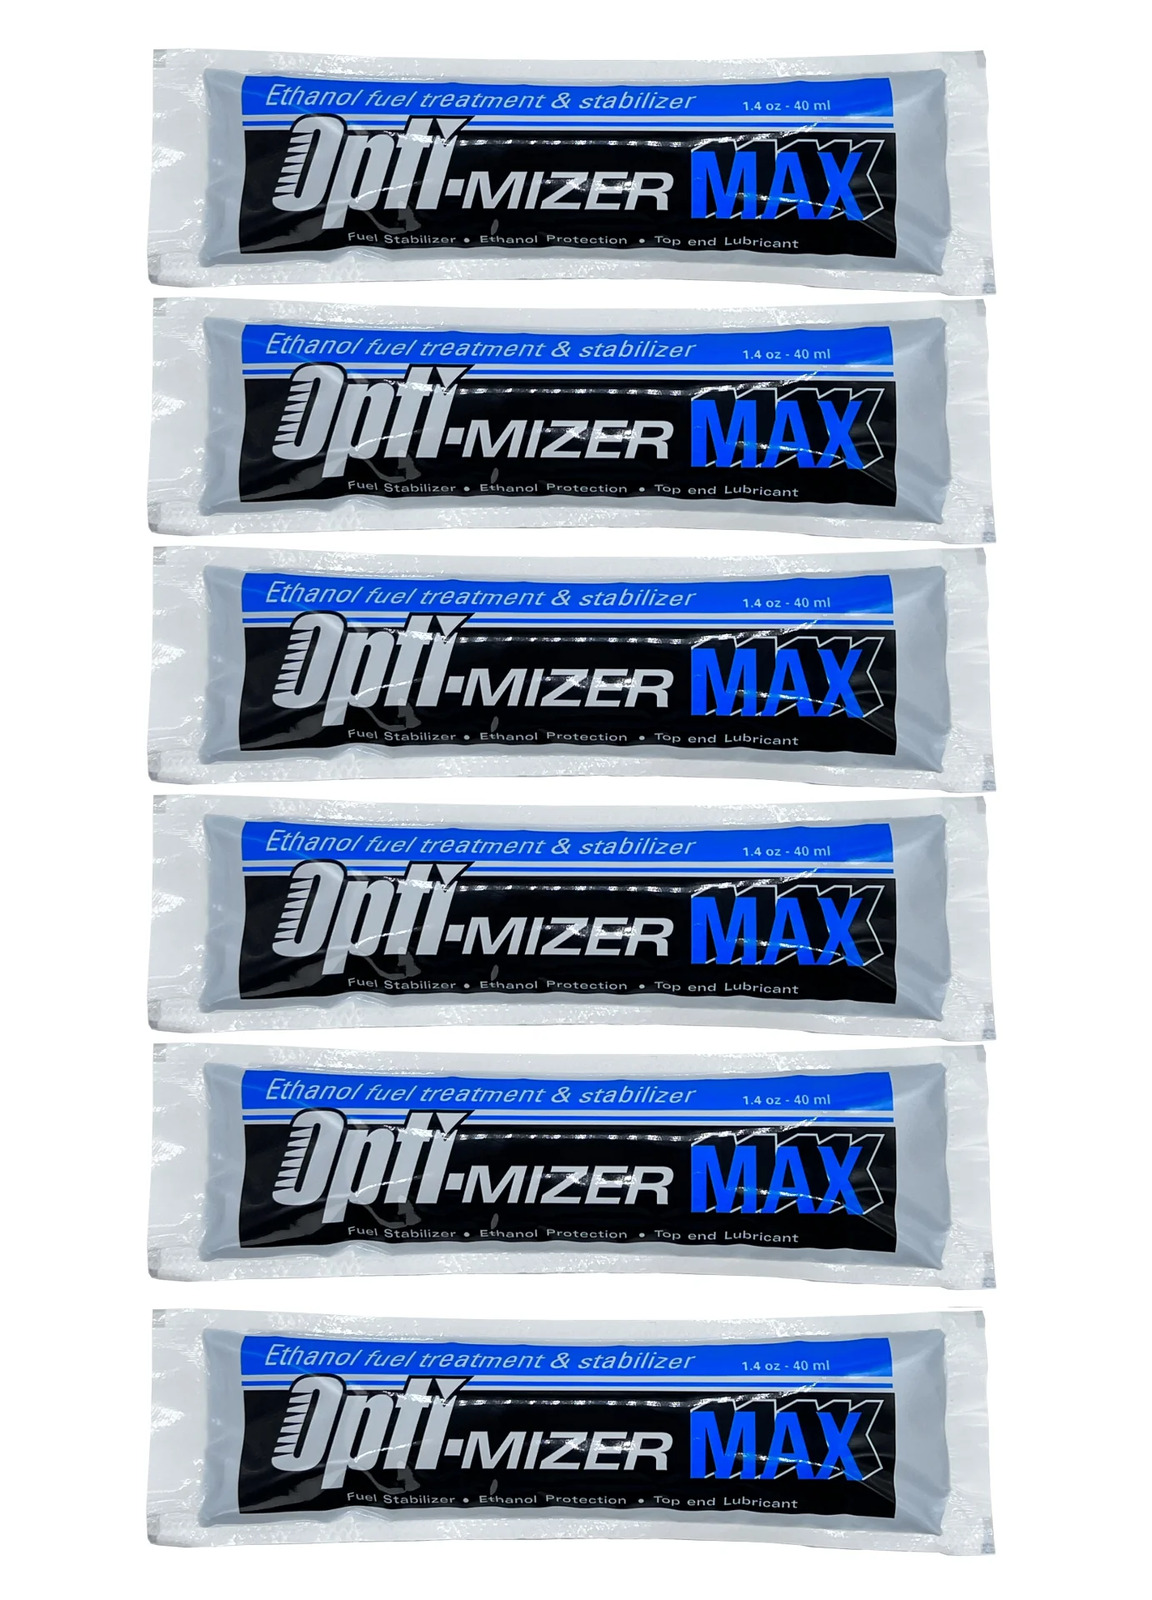 Opti-mizer MAX 60612 1.4 fl Oz Ethanol Fuel Treatment with Stabilizer - 6 Pack